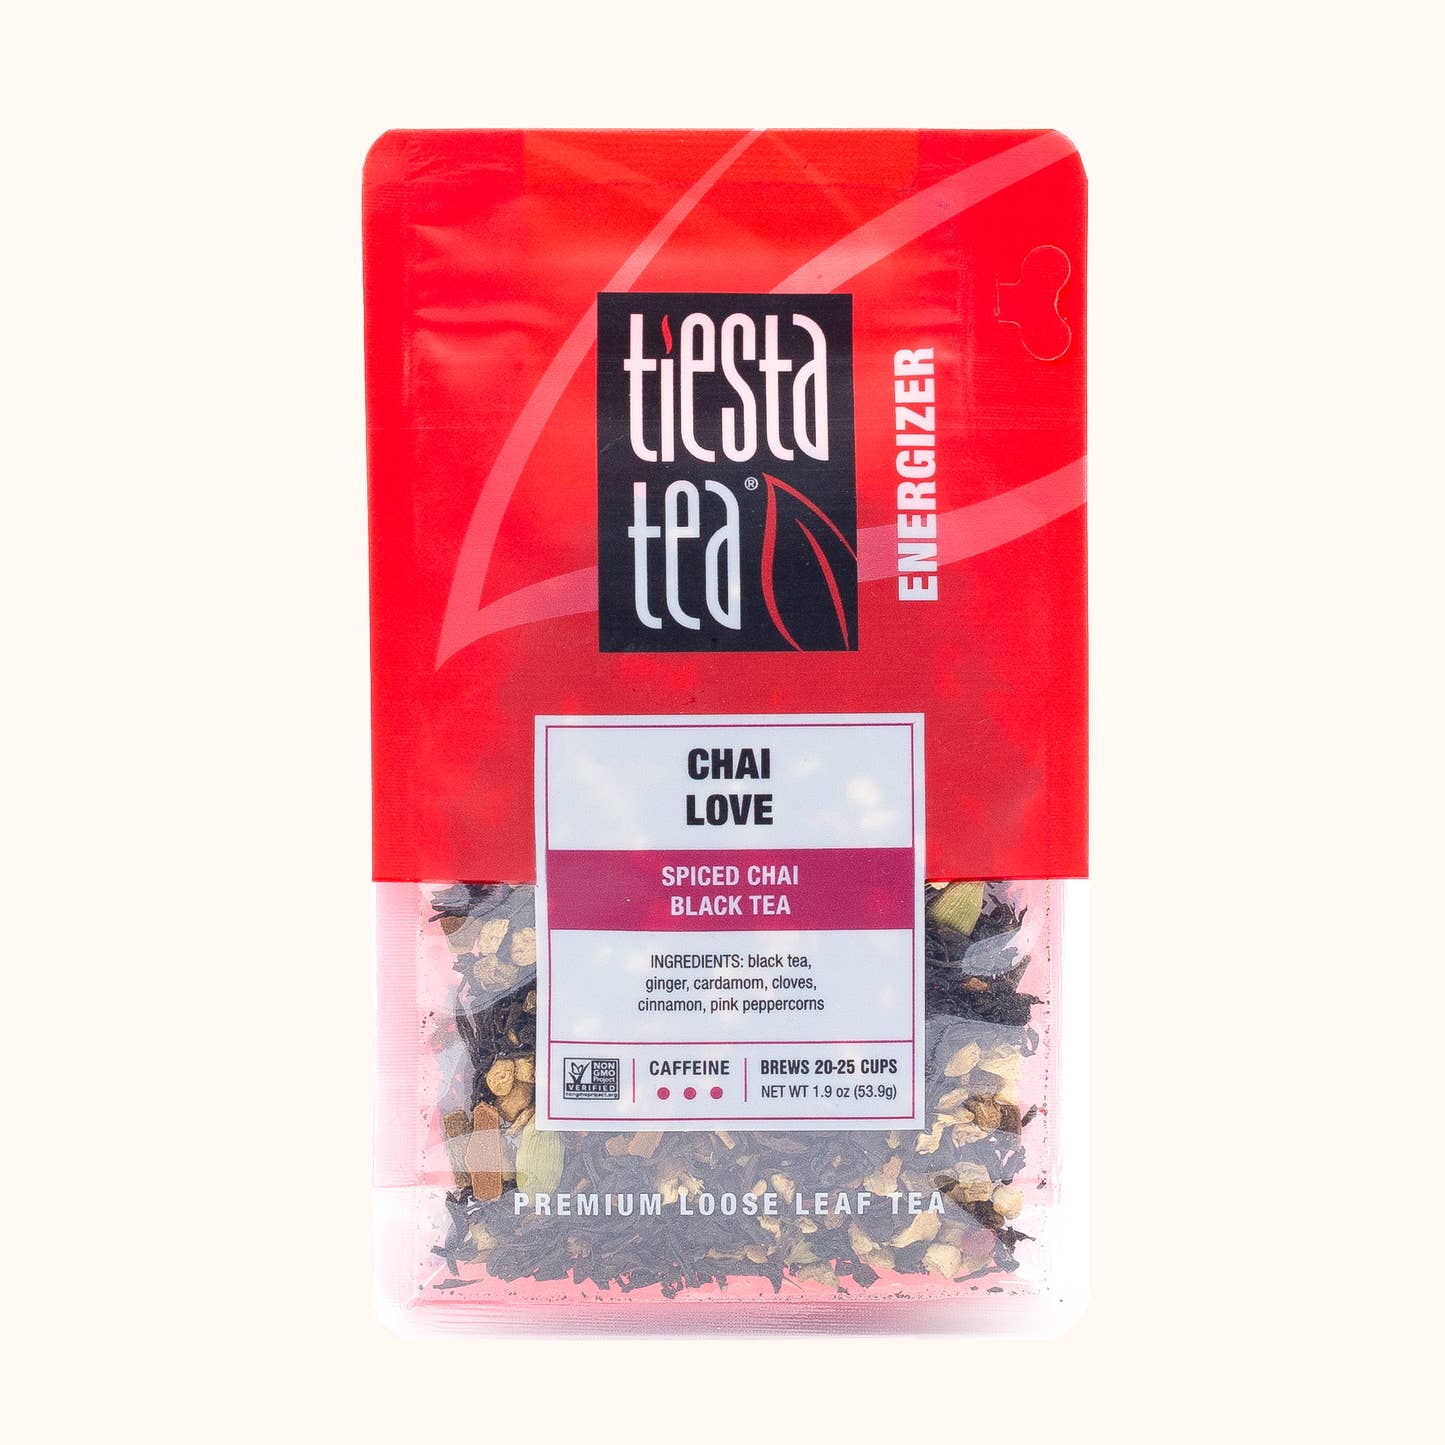 Chai love by Tiesta Tea pouch